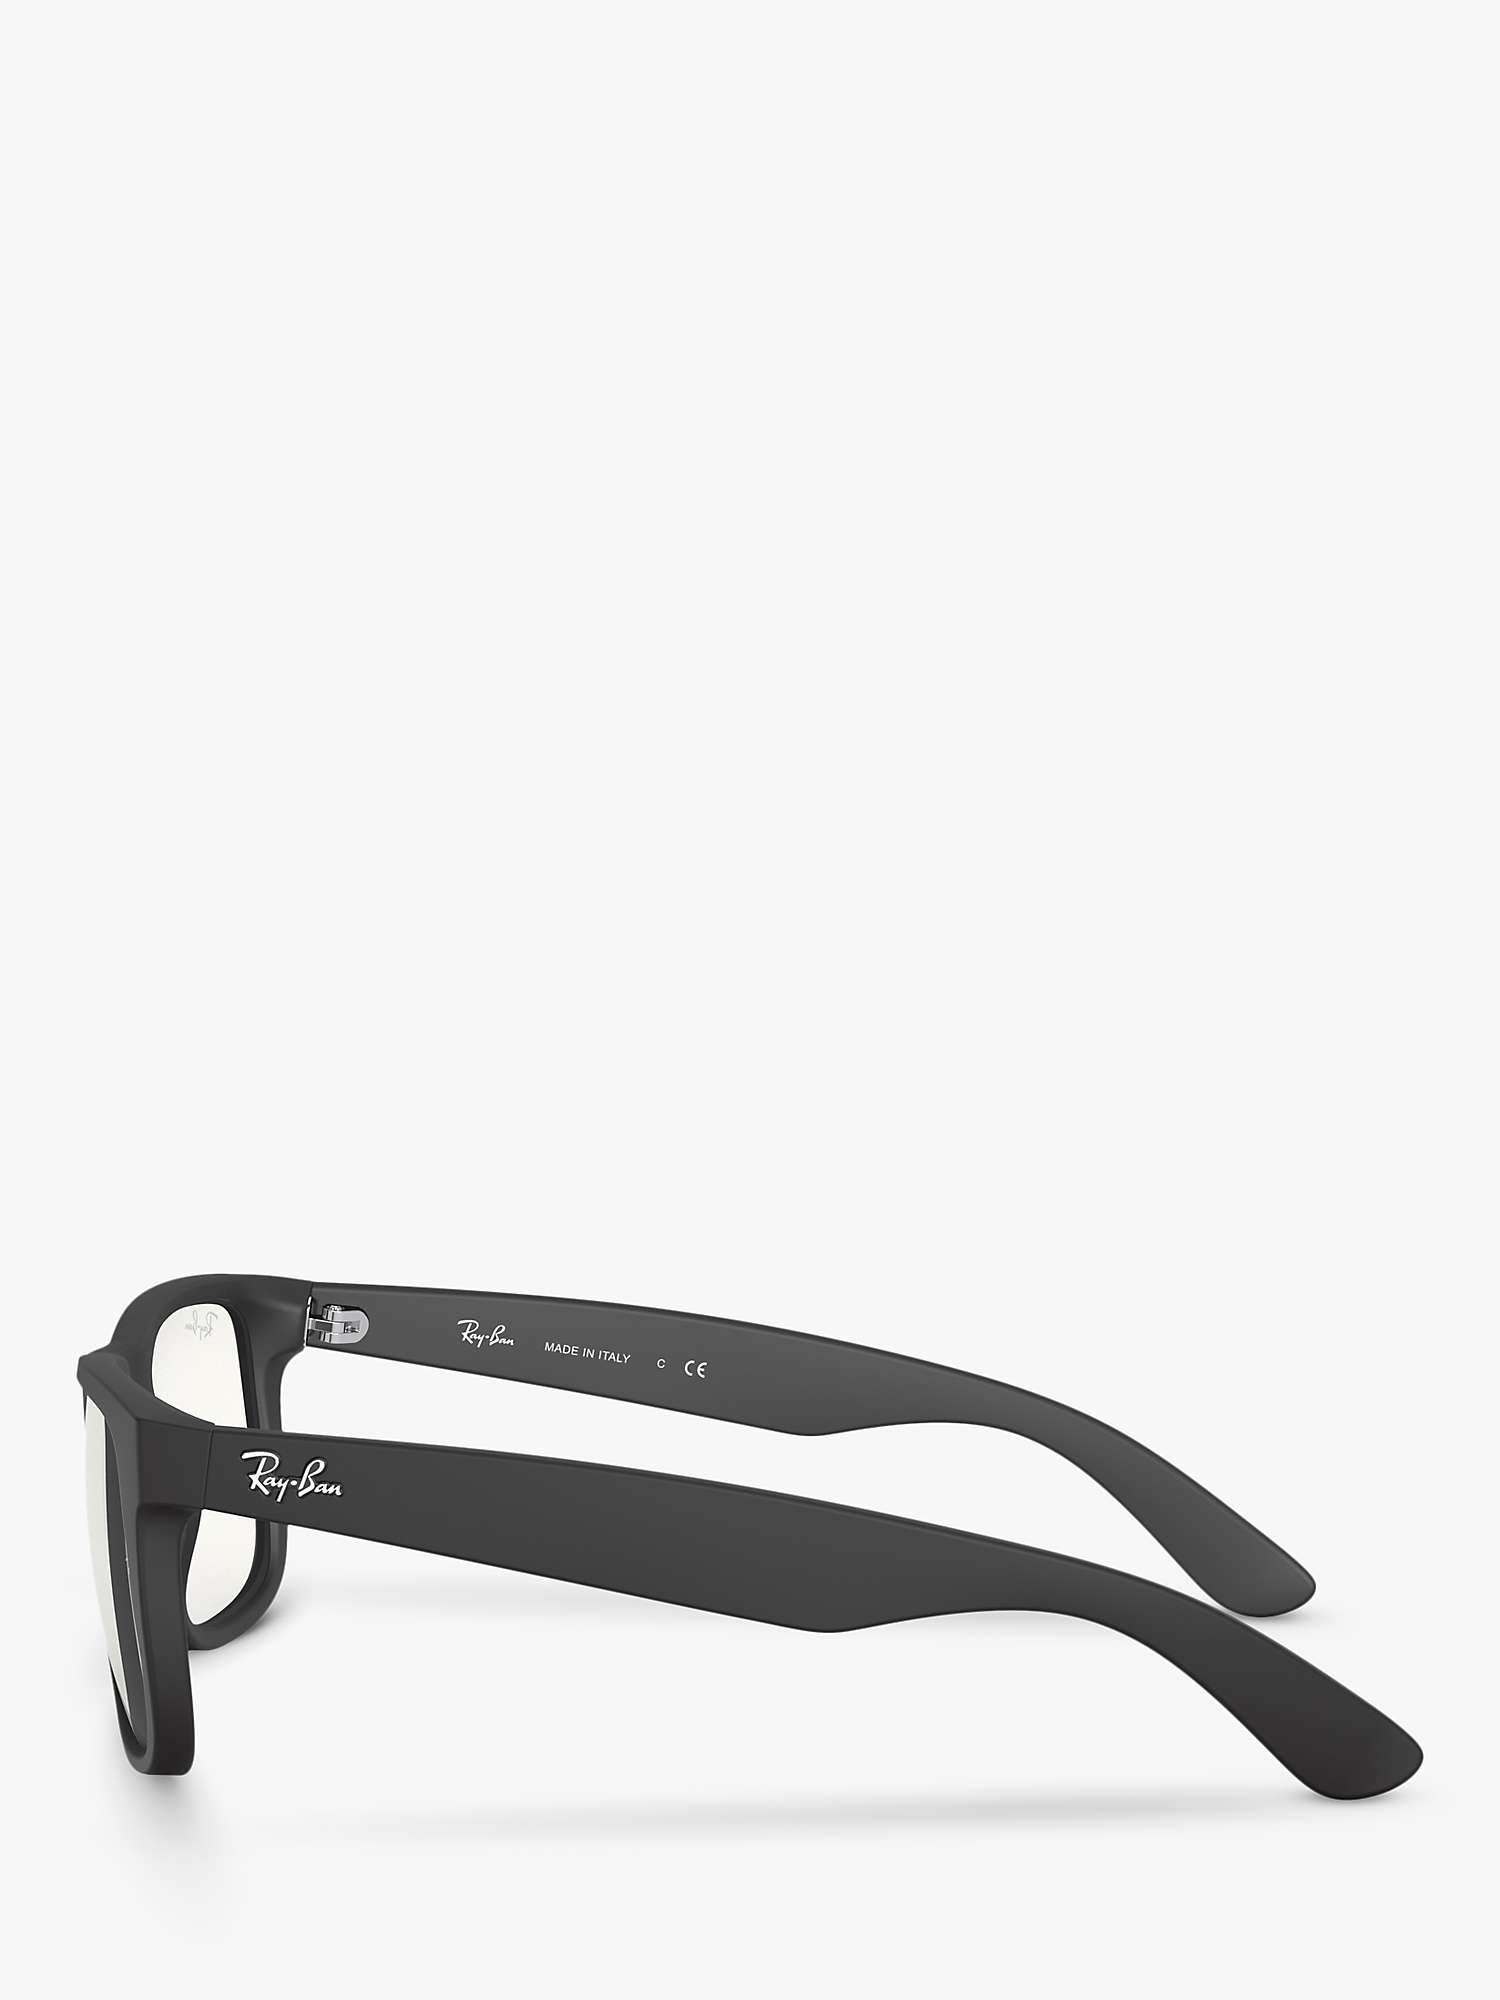 Buy Ray-Ban RB4165 Women's Rectangular Sunglasses, Black Online at johnlewis.com